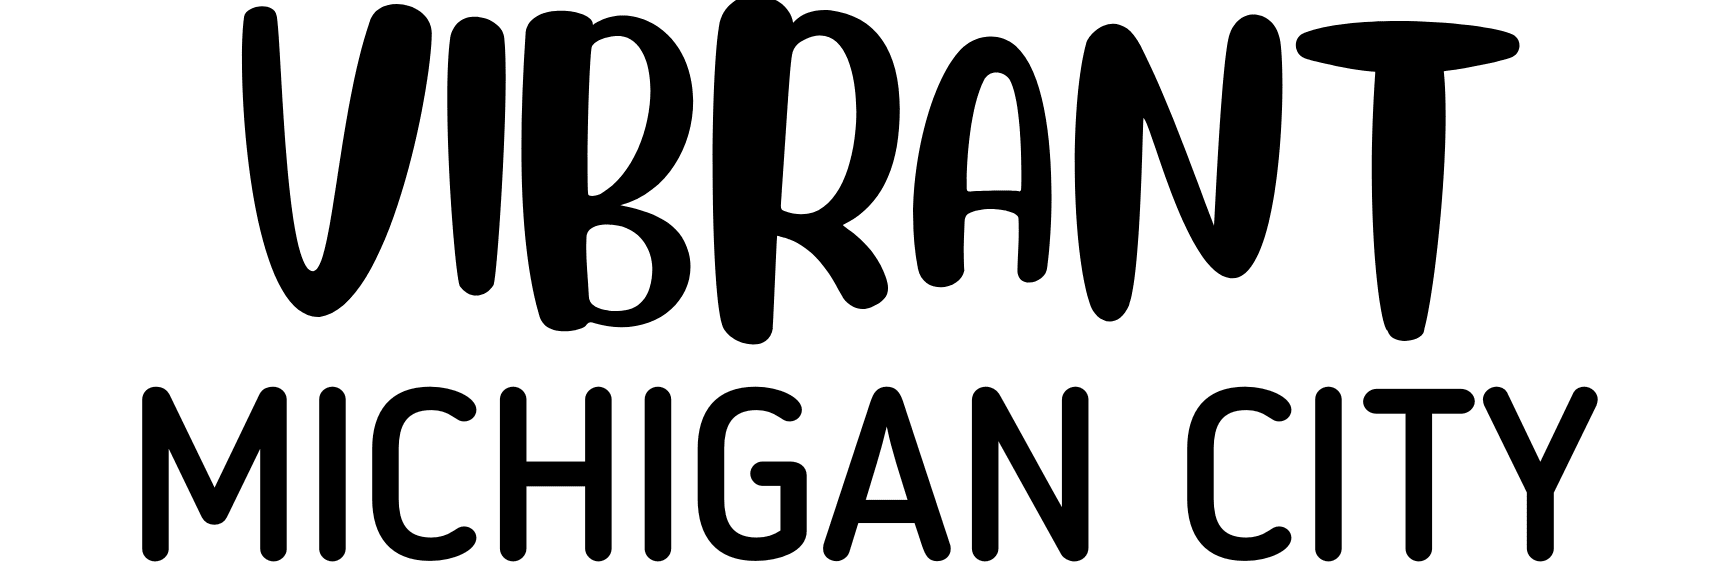 Vibrant Michigan City logo